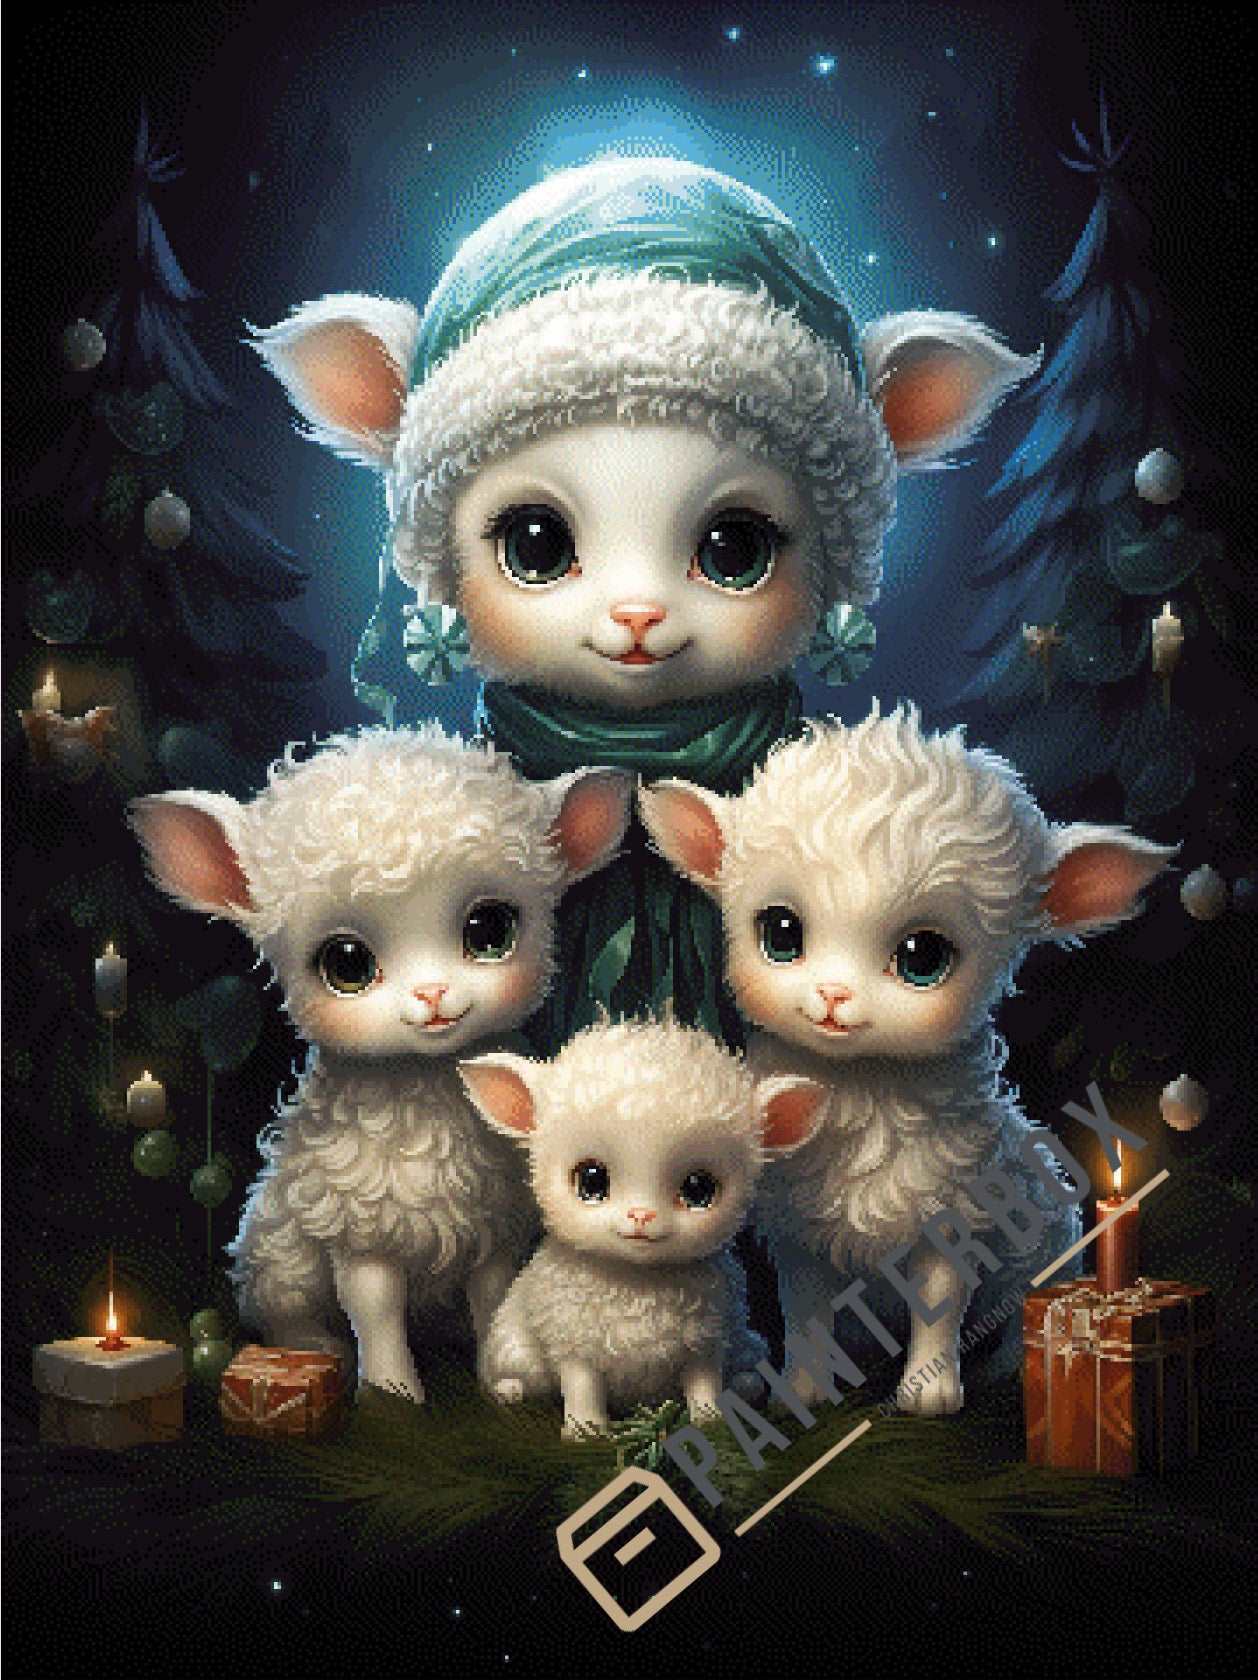 Christmas Sheeps by PiXXelPics - 220 Farben eckig